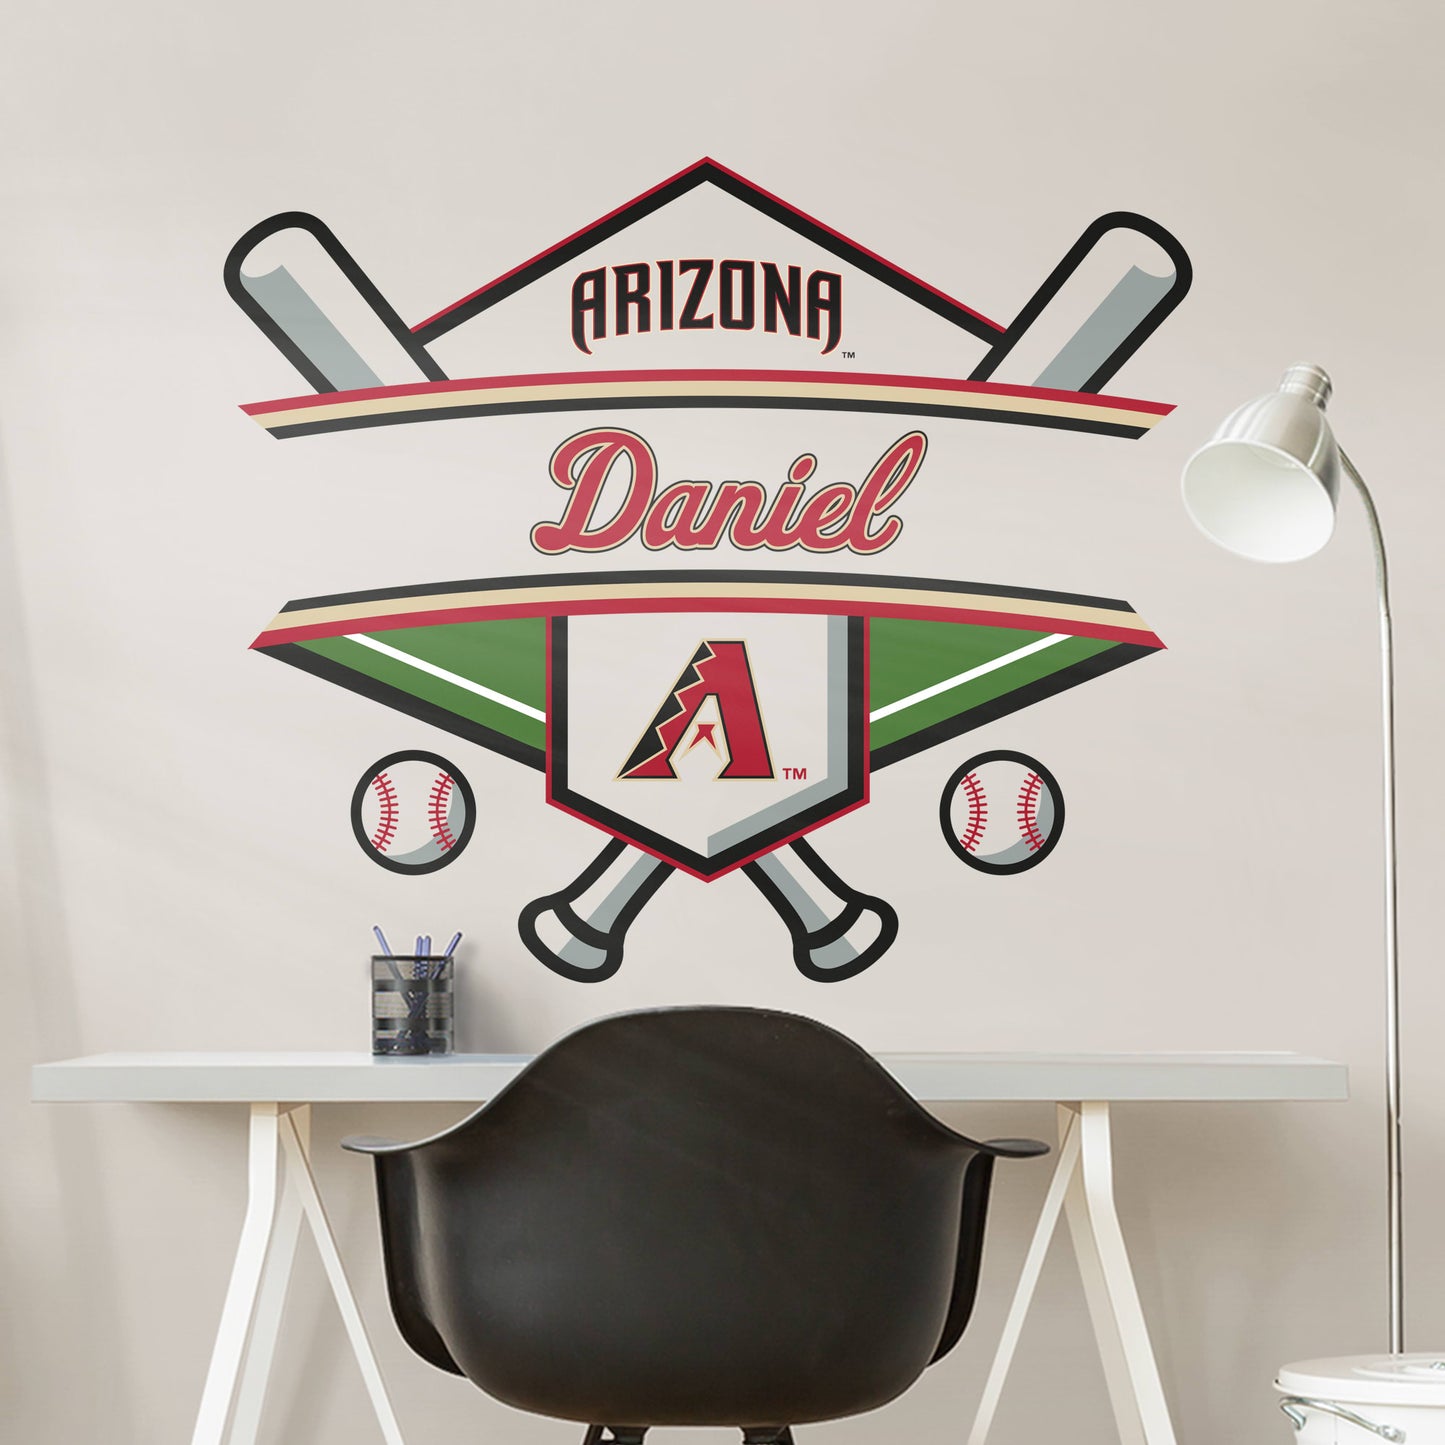 Arizona Diamondbacks: Personalized Name - Officially Licensed MLB Transfer Decal